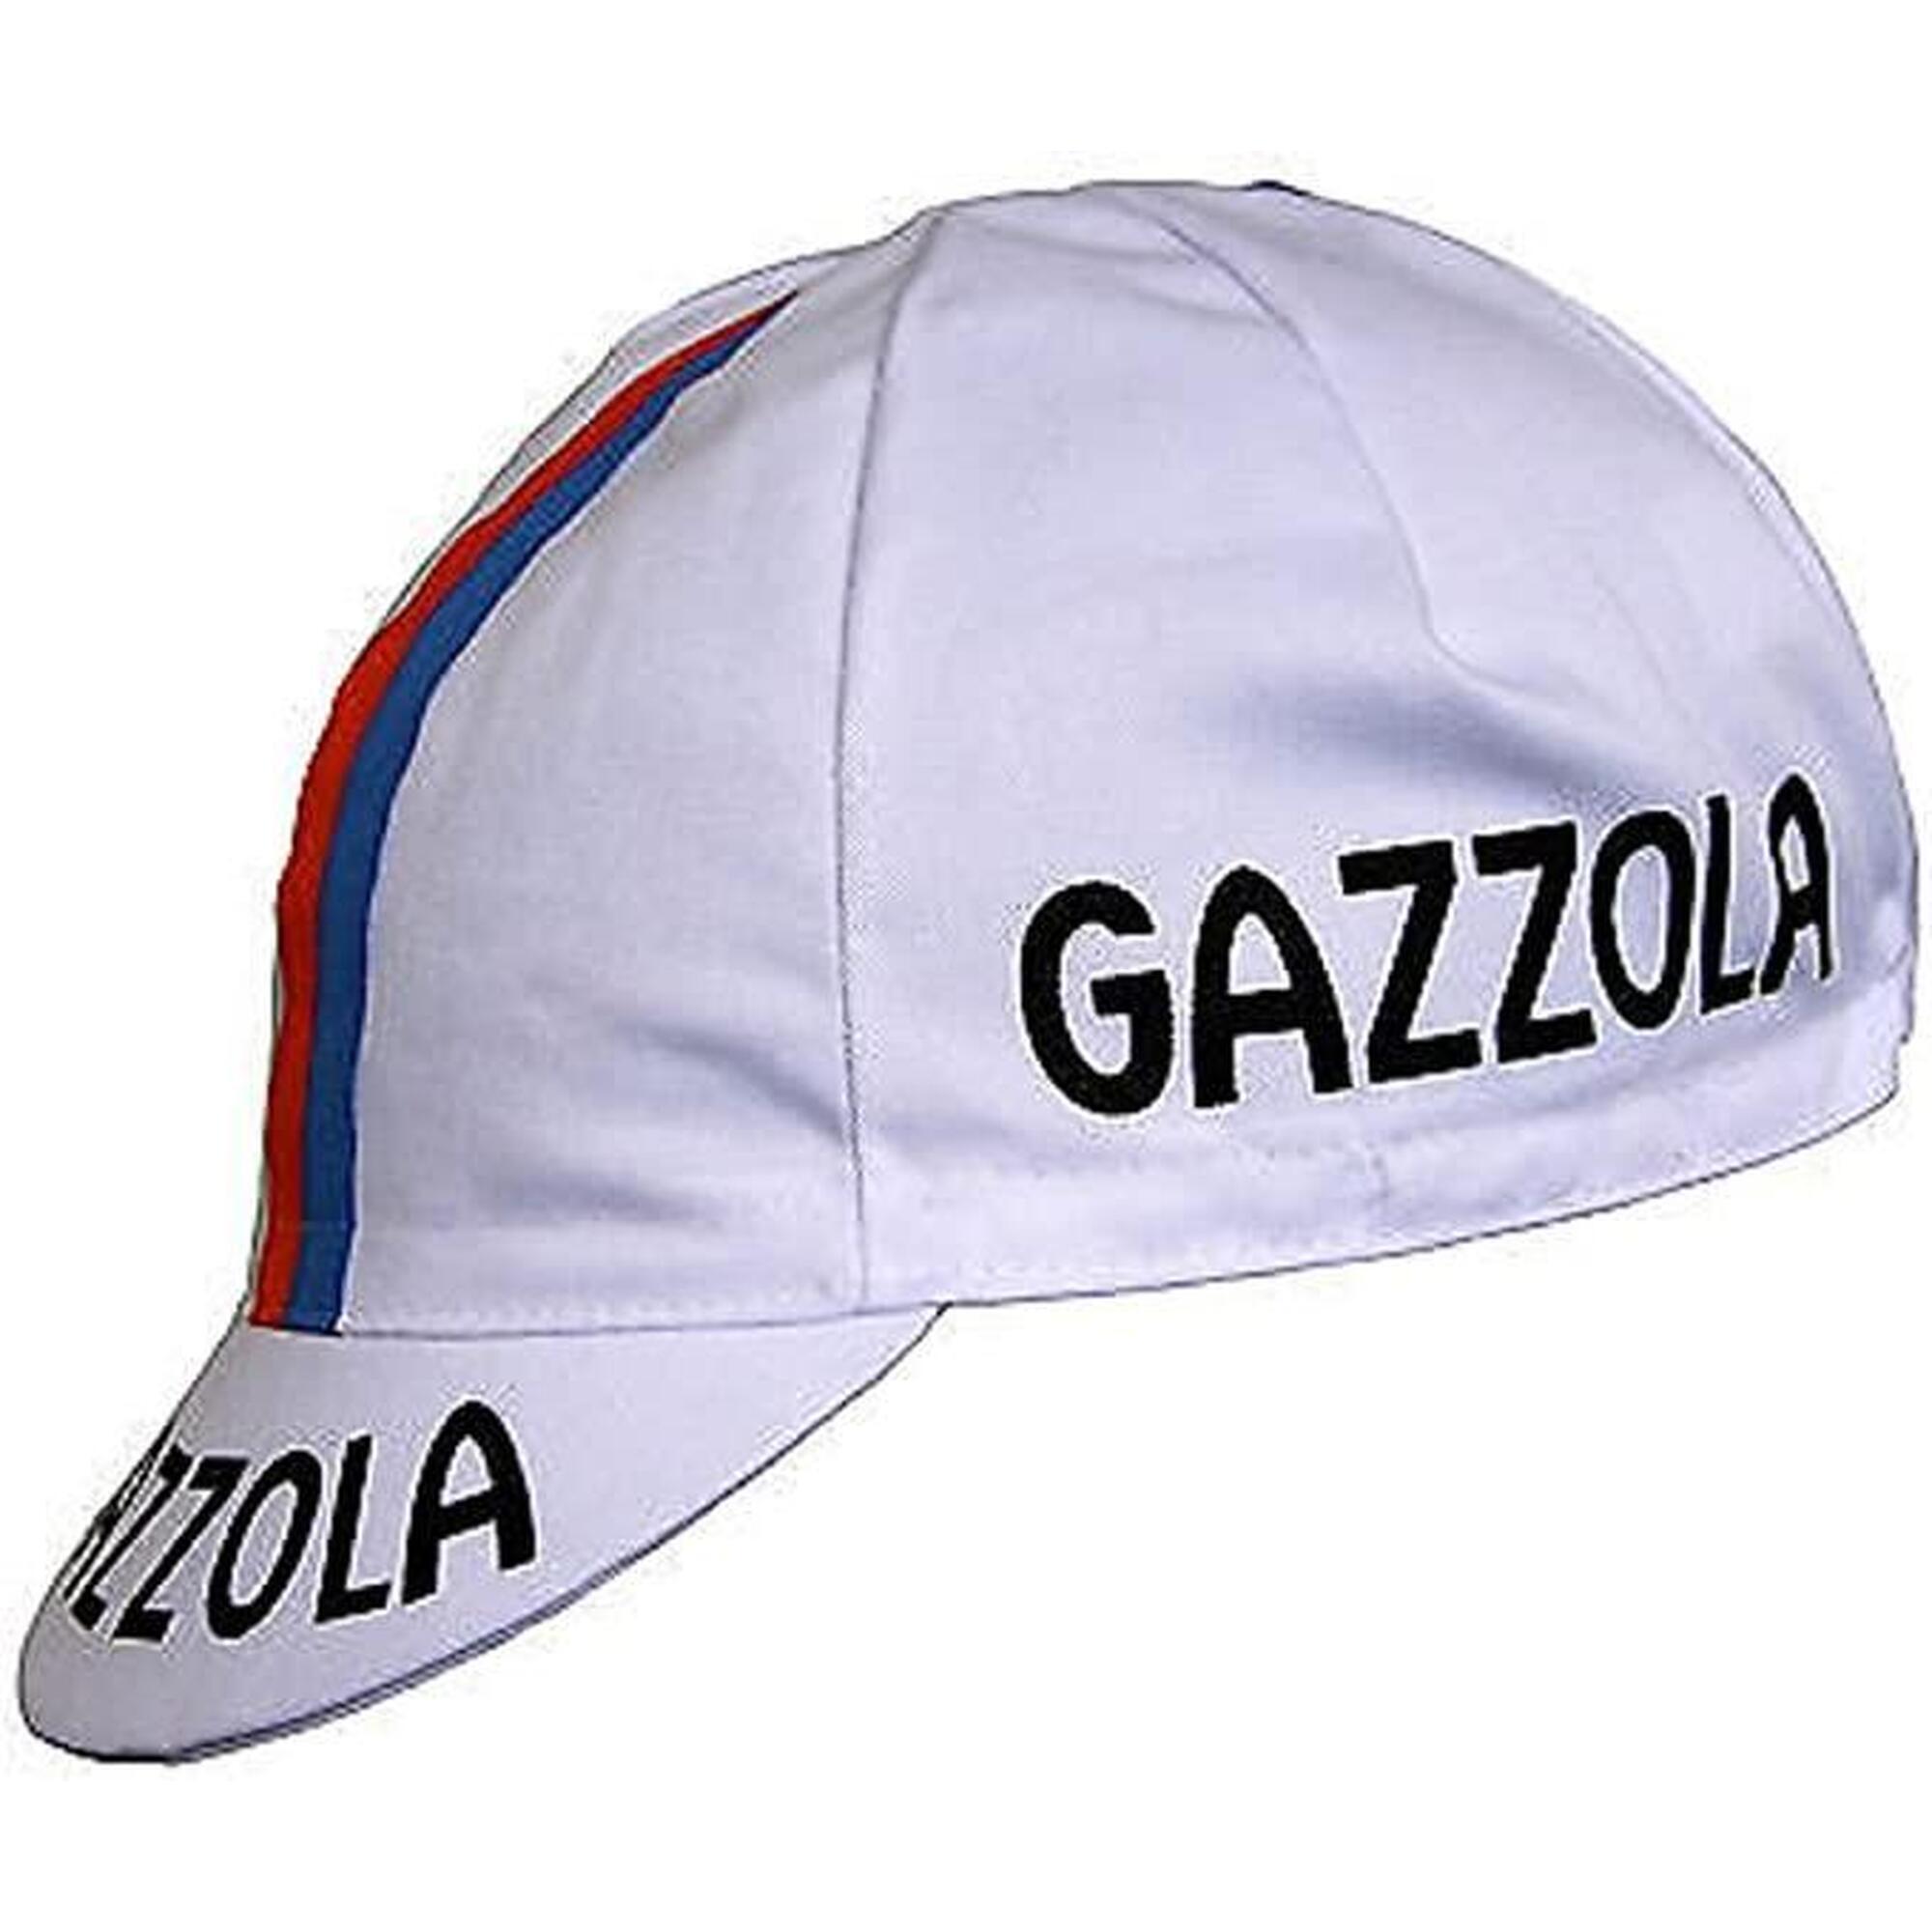 Gazzola Team Cycling Cap Retro Racing Vintage Fixie 1/1